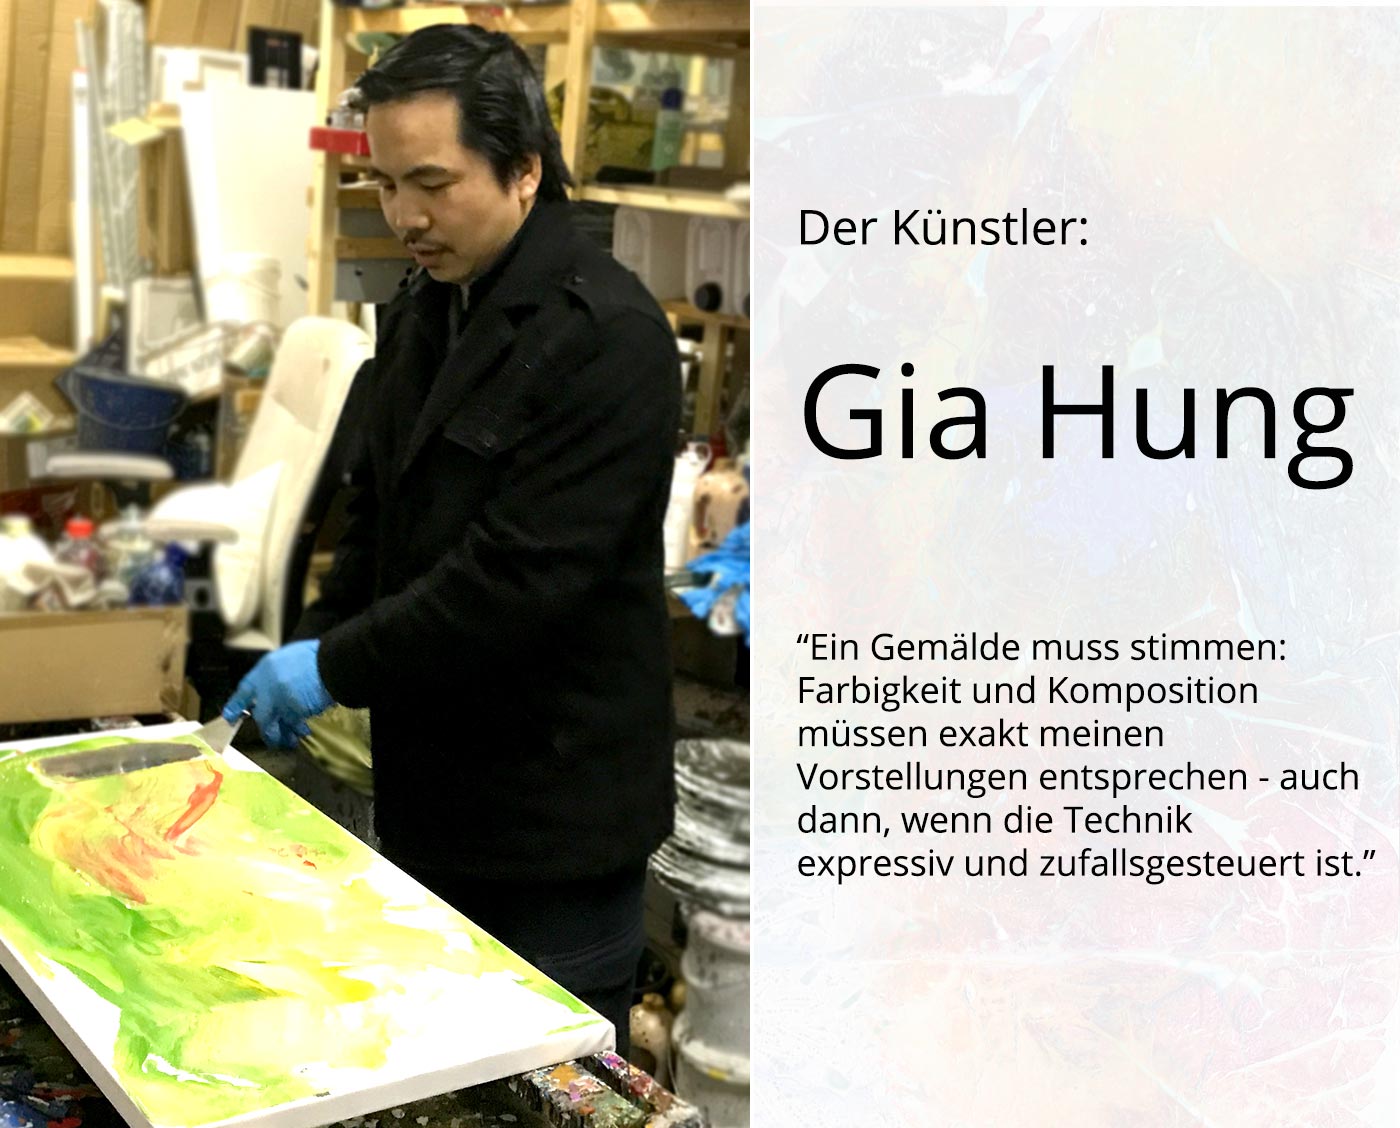 Sonderedition, Monatsgemälde als Kunstdruck v. Gia Hung: "Elementar III"